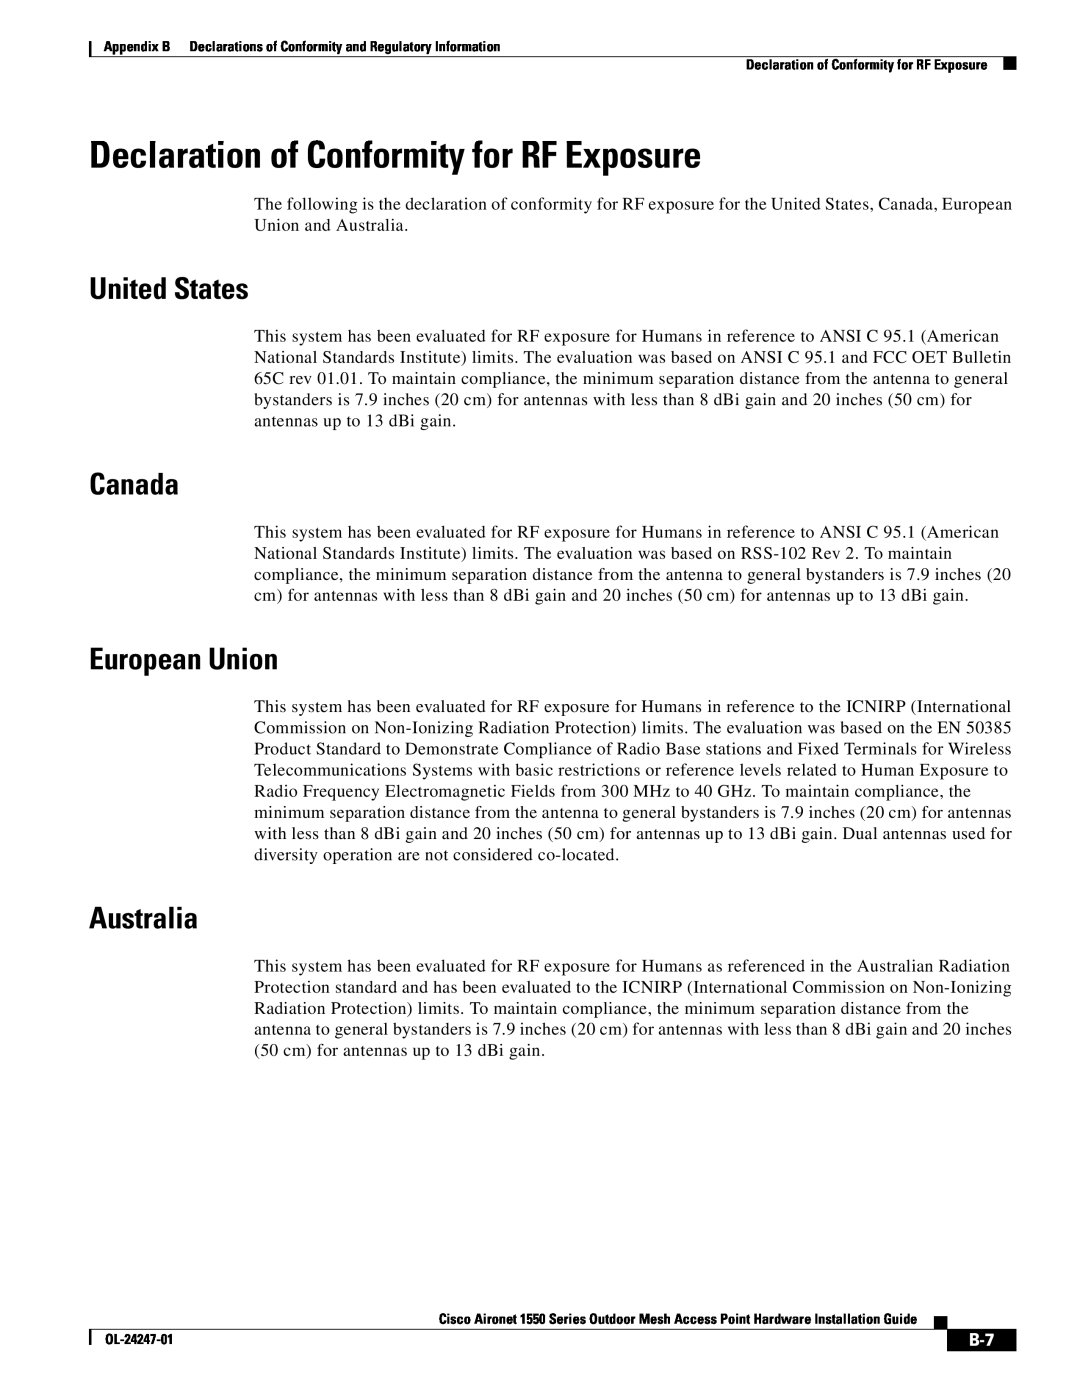 Cisco Systems AIRPWRINJ15002 United States, Canada, European Union, Australia, Declaration of Conformity for RF Exposure 